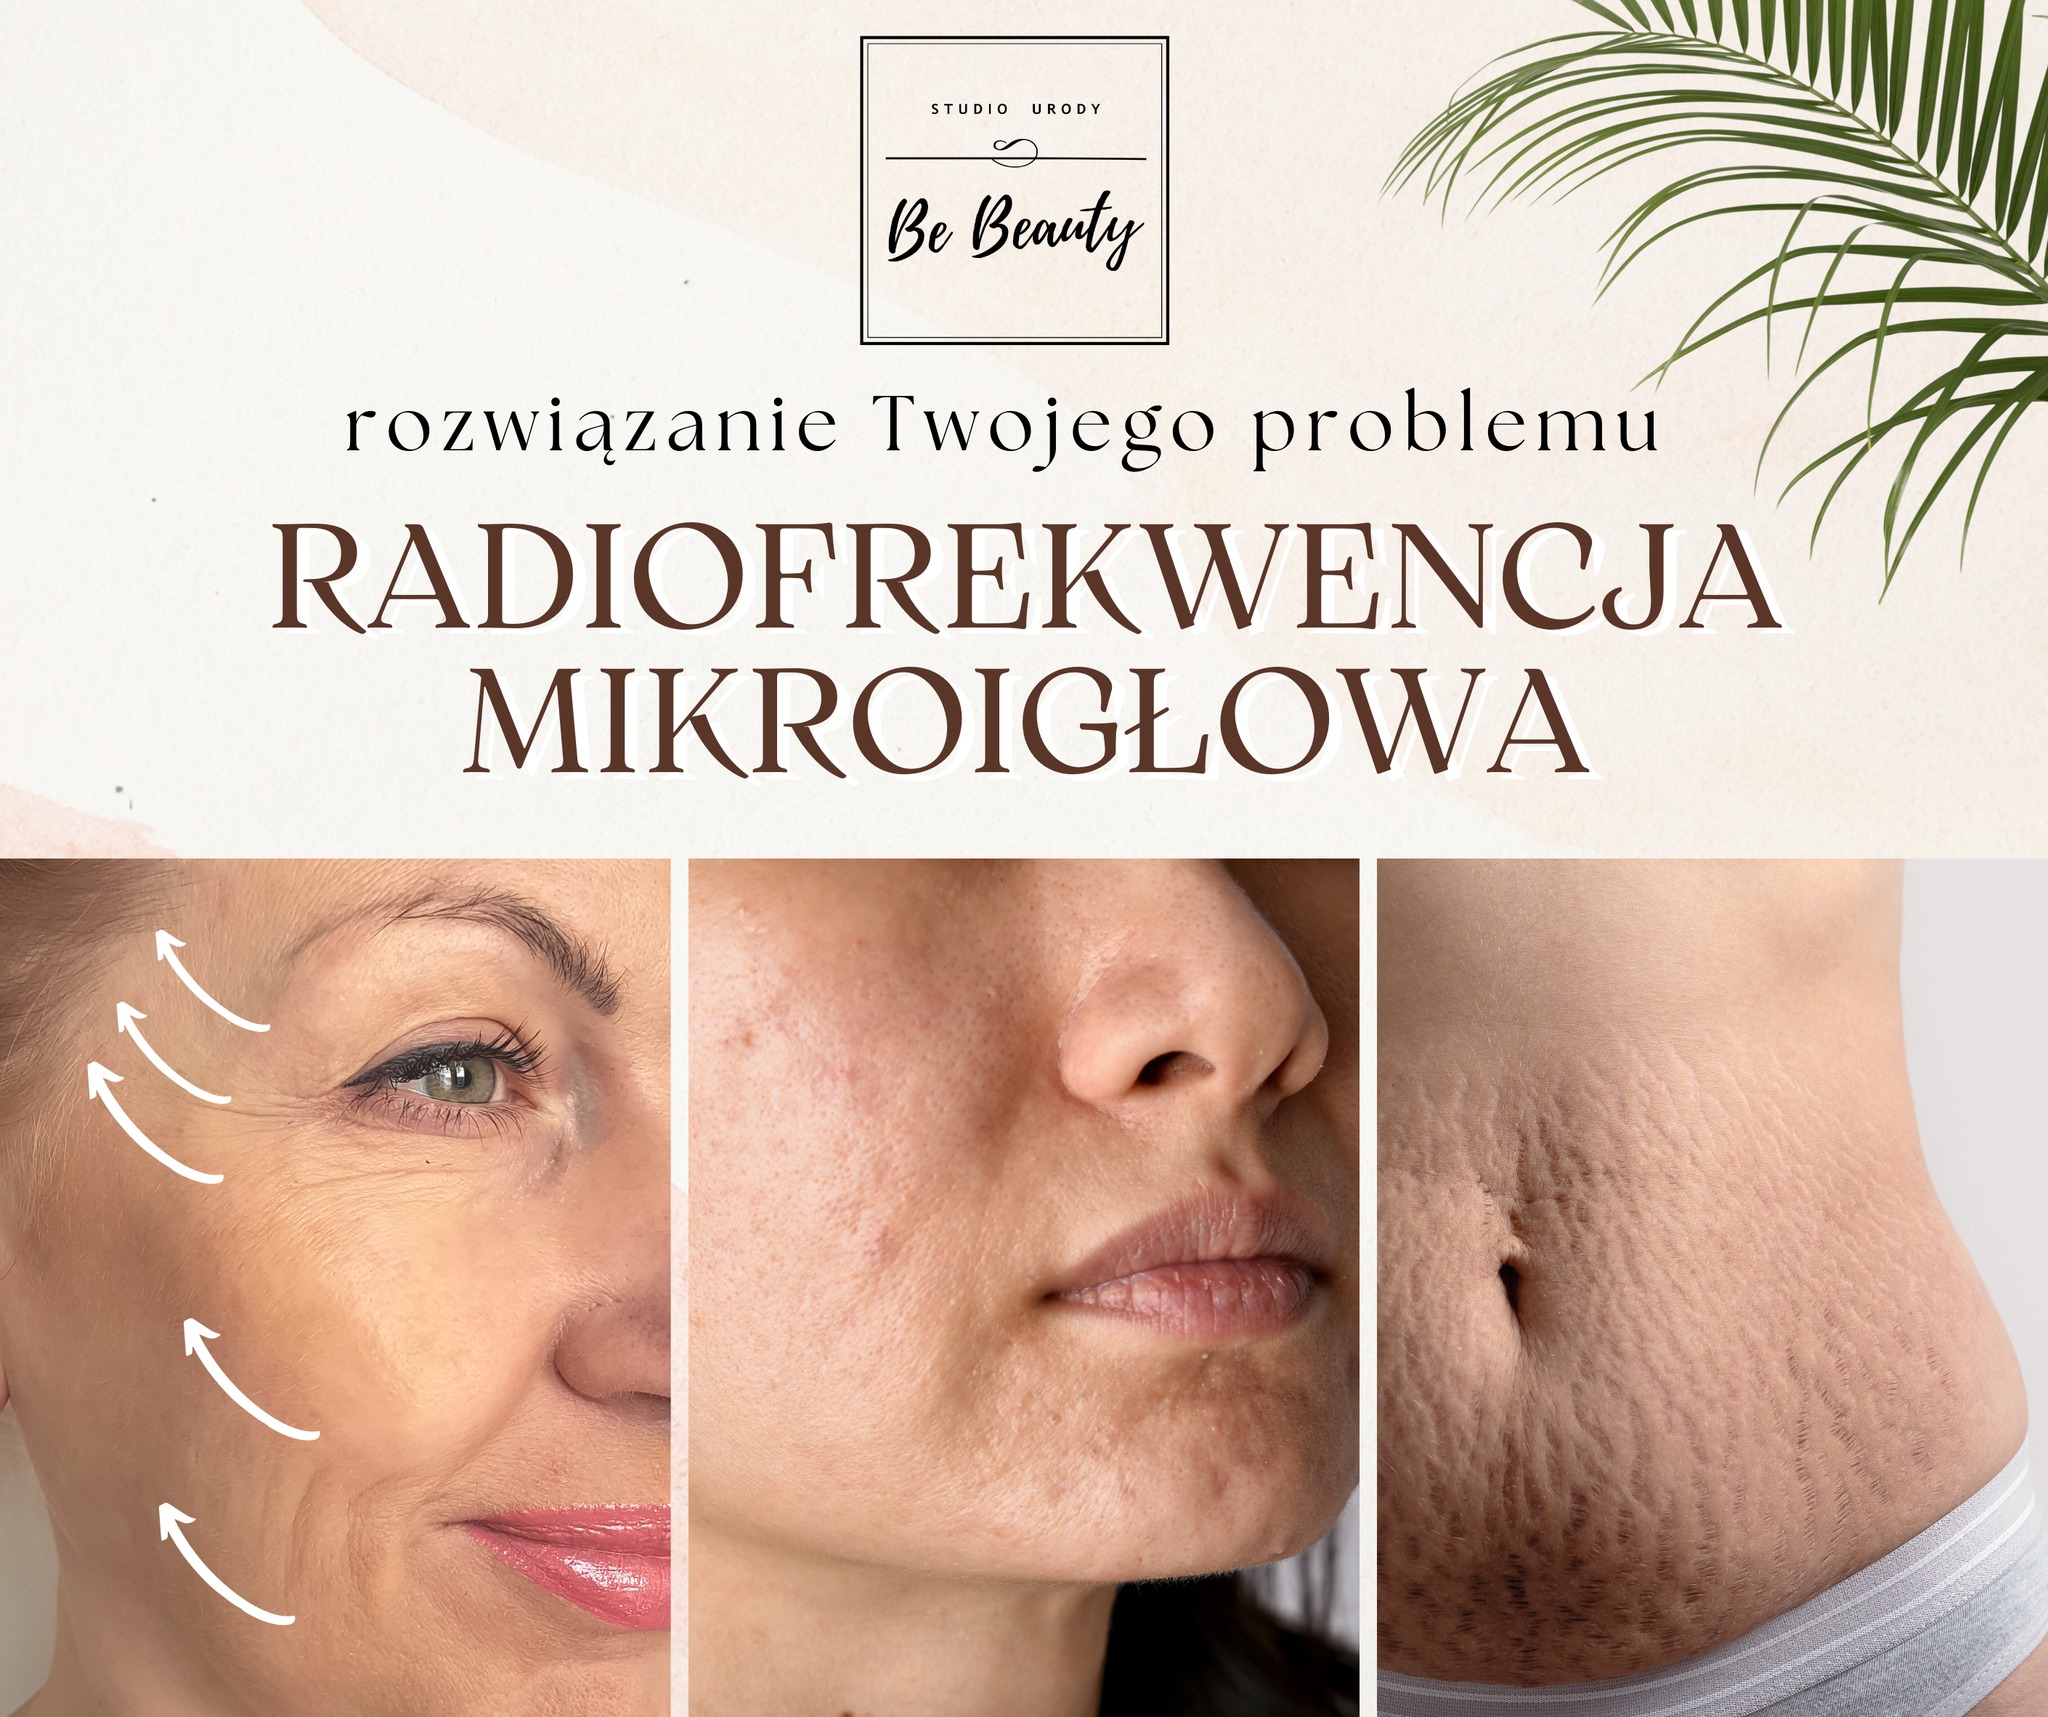 You are currently viewing Radiofrekwencja Mikroigłowa